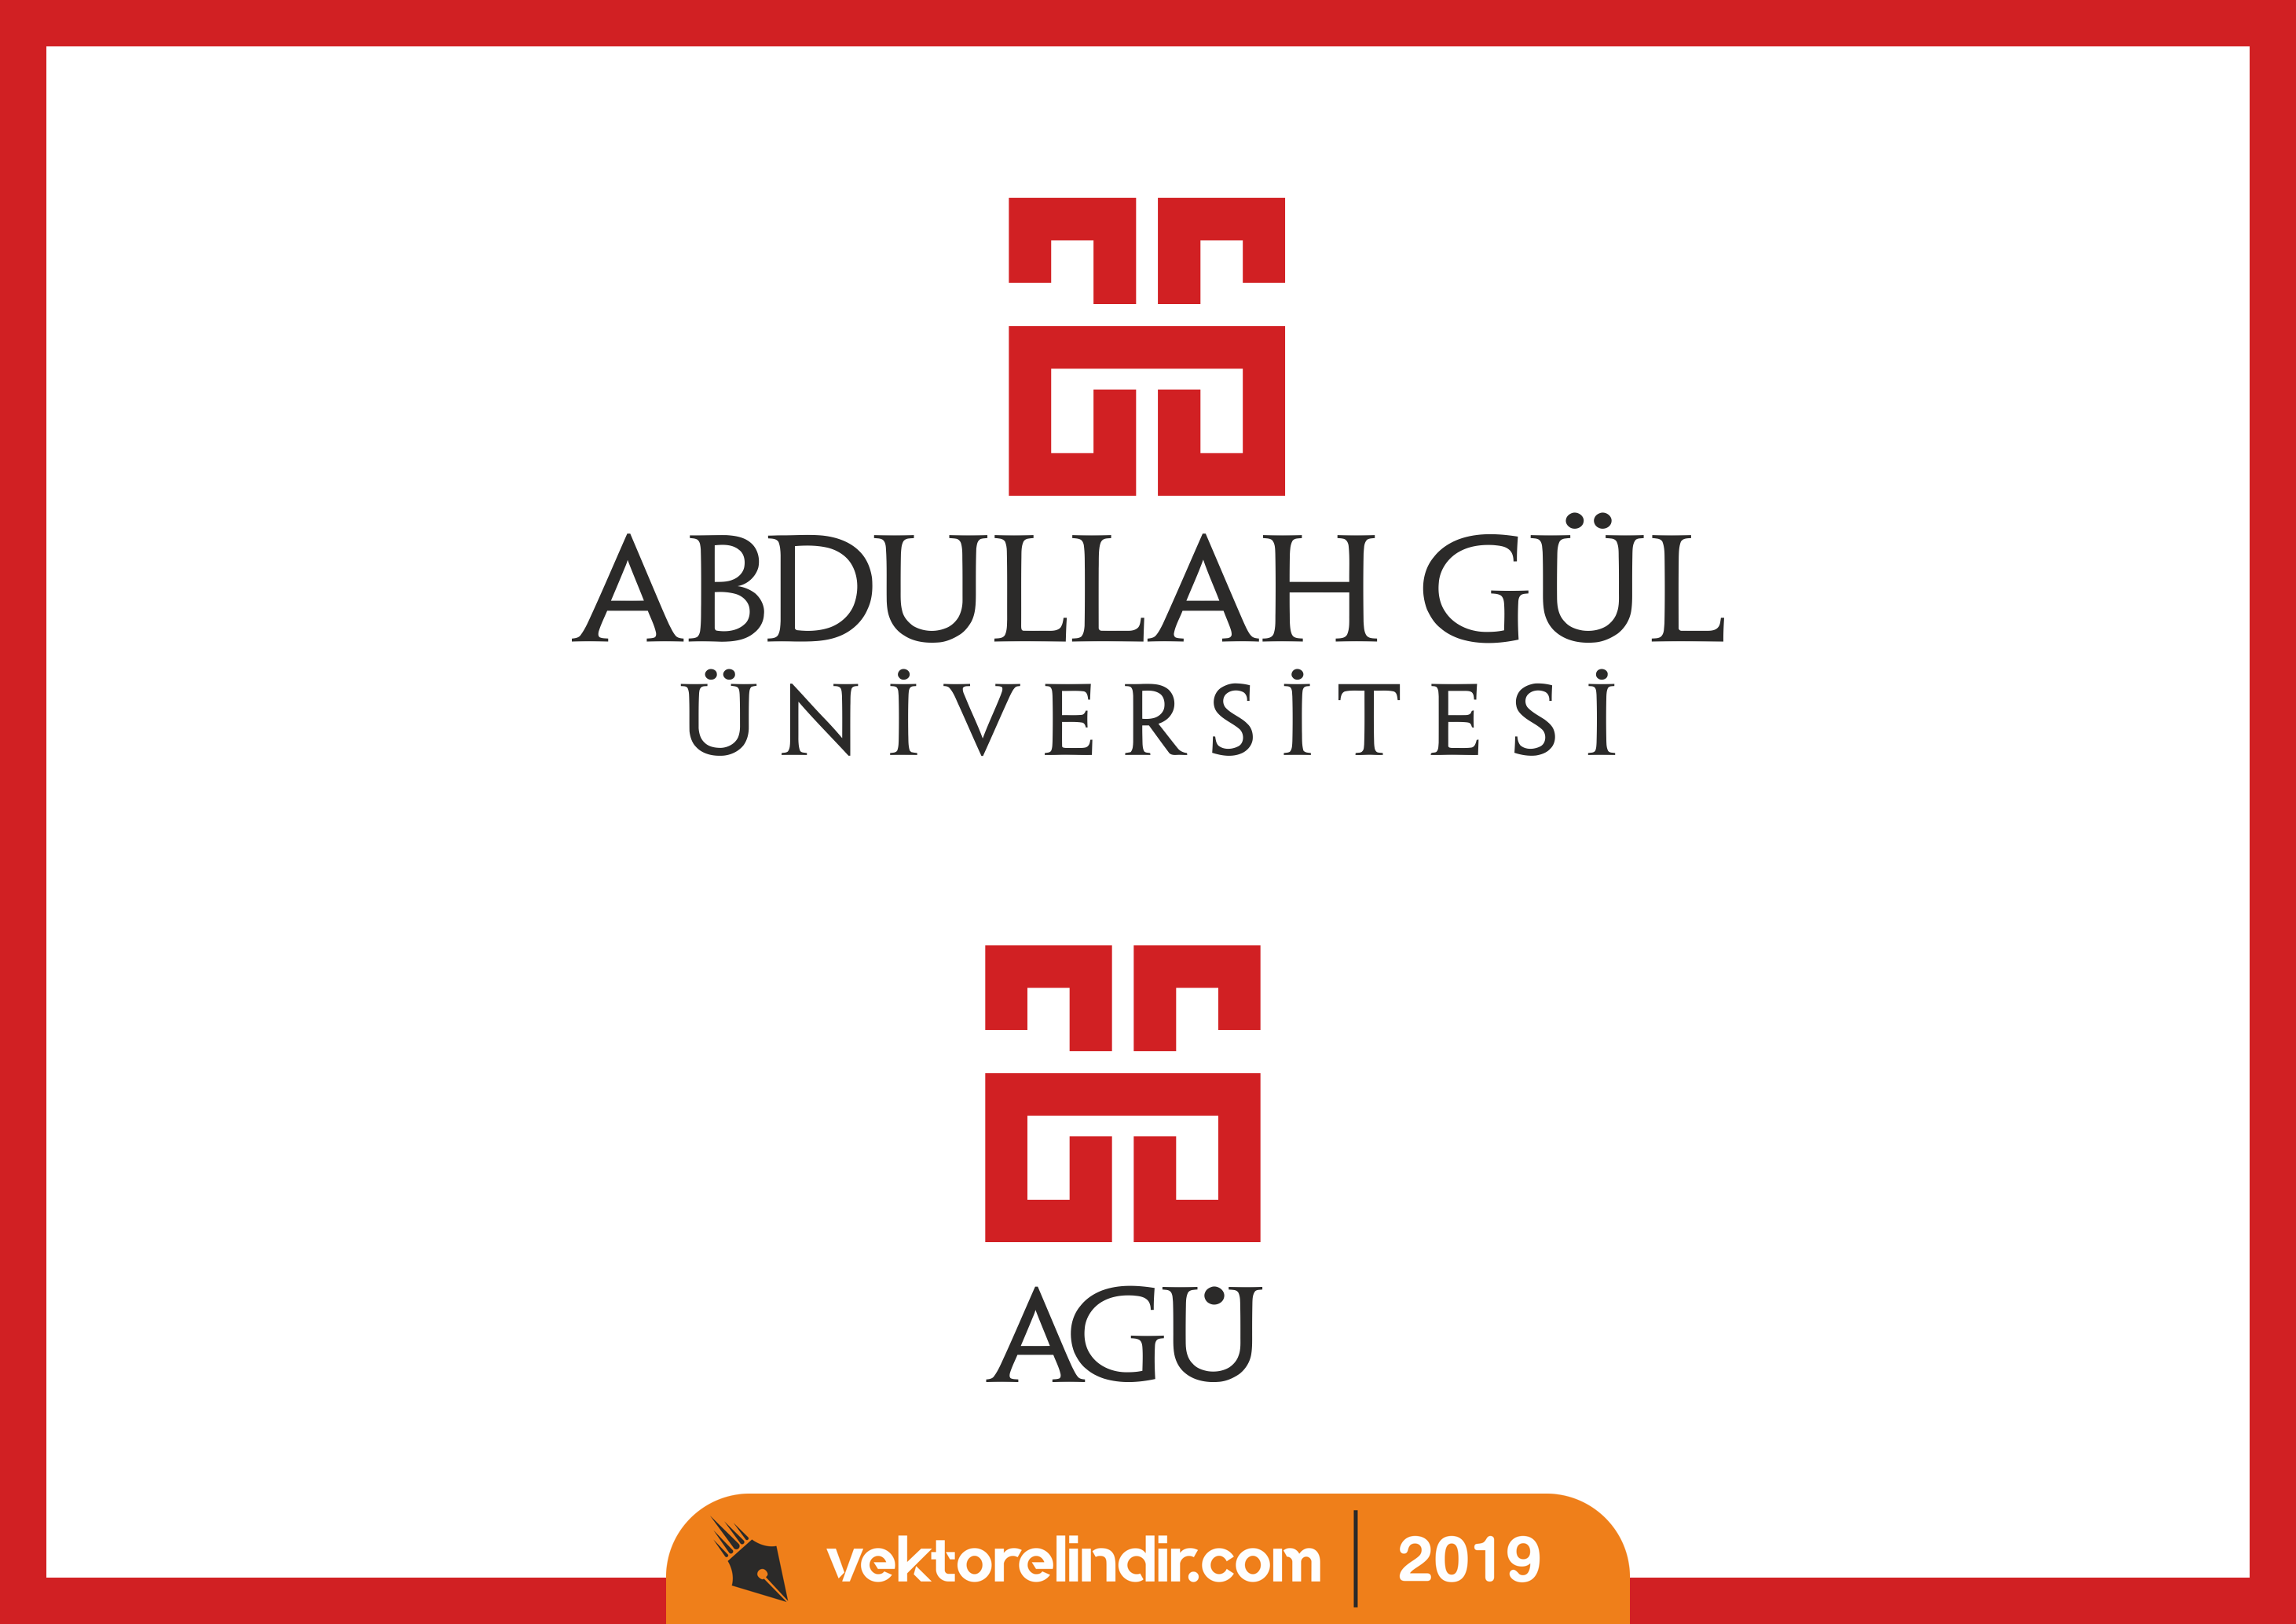 Abdullah Gül Üniversitesi Logo, Amblem